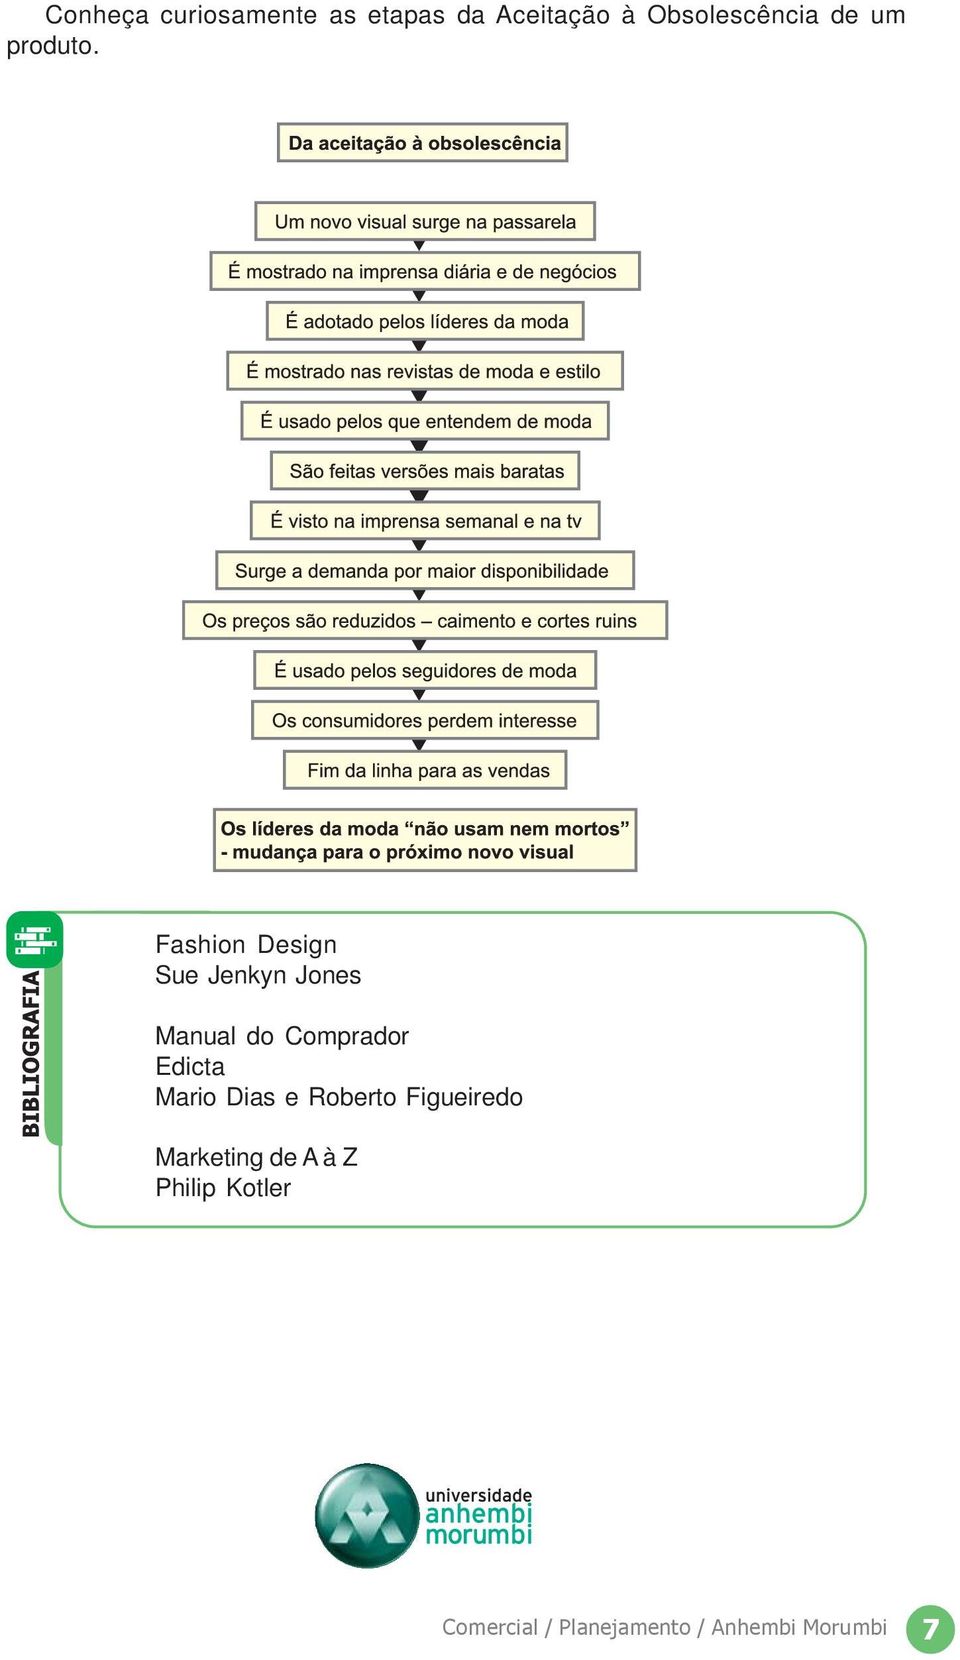 Fashion Design Sue Jenkyn Jones Manual do Comprador Edicta